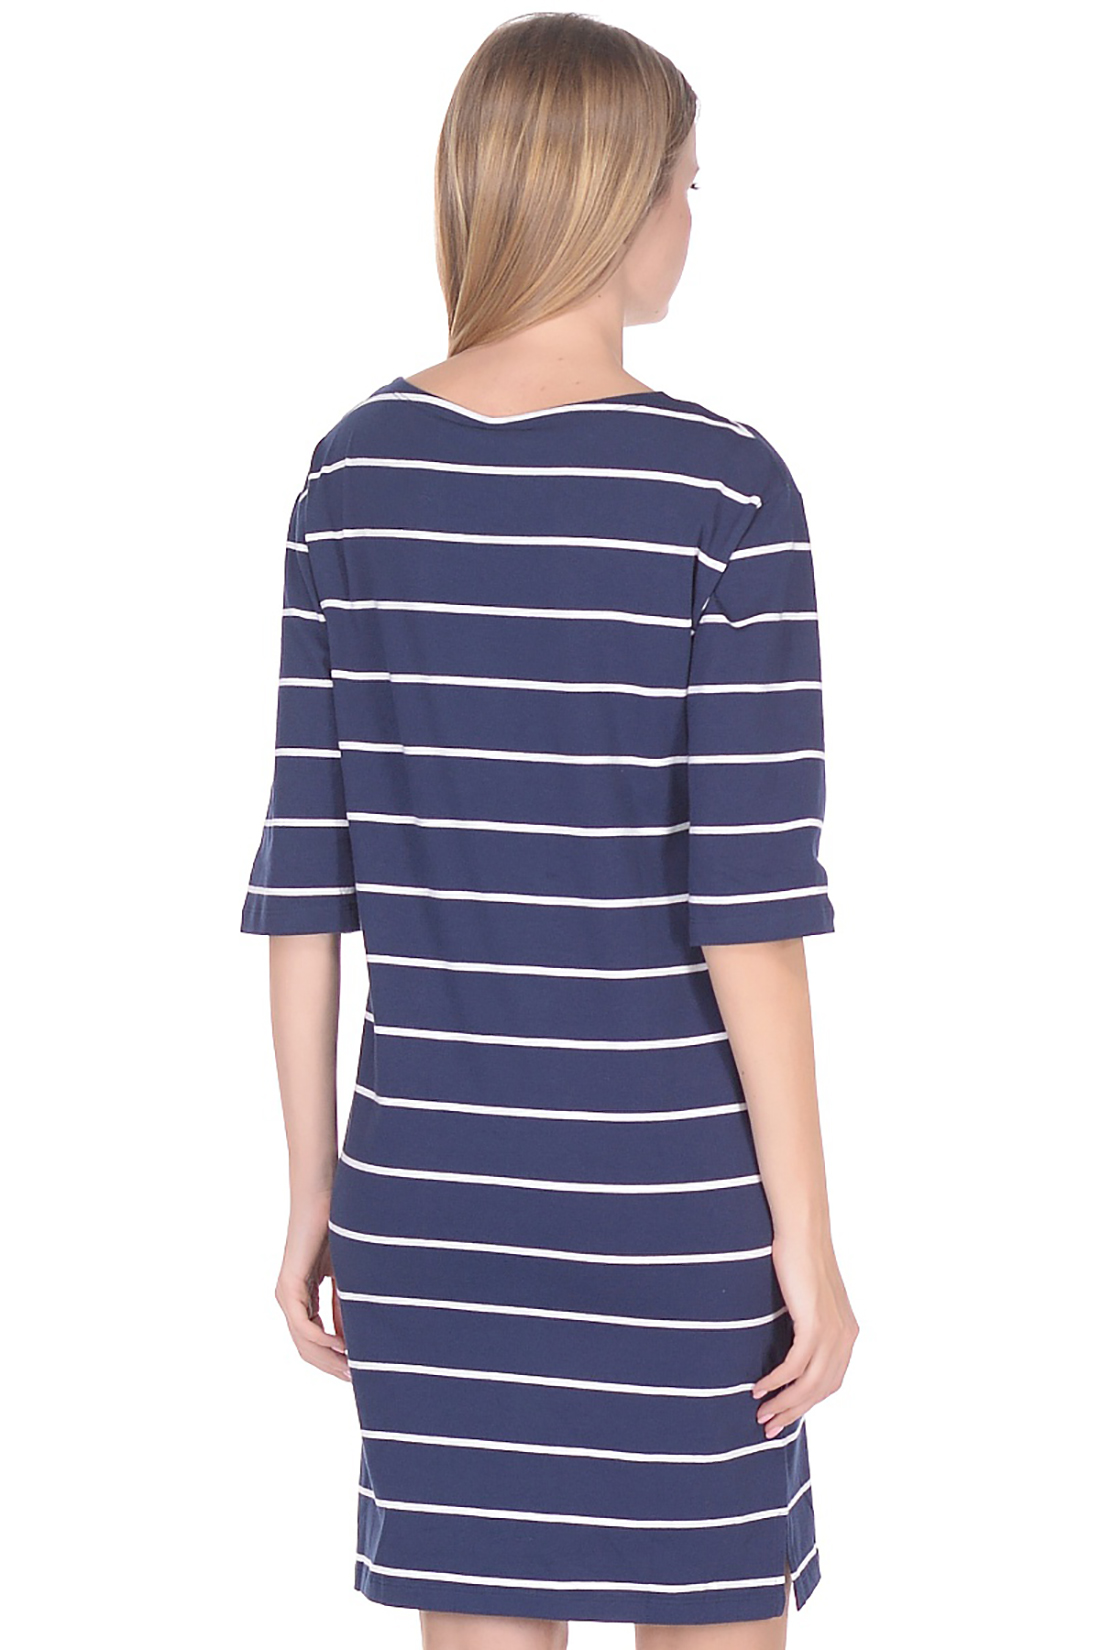 Платье из трикотажа в полоску (арт. baon B458046), размер 3XL, цвет dark navy striped#синий Платье из трикотажа в полоску (арт. baon B458046) - фото 2